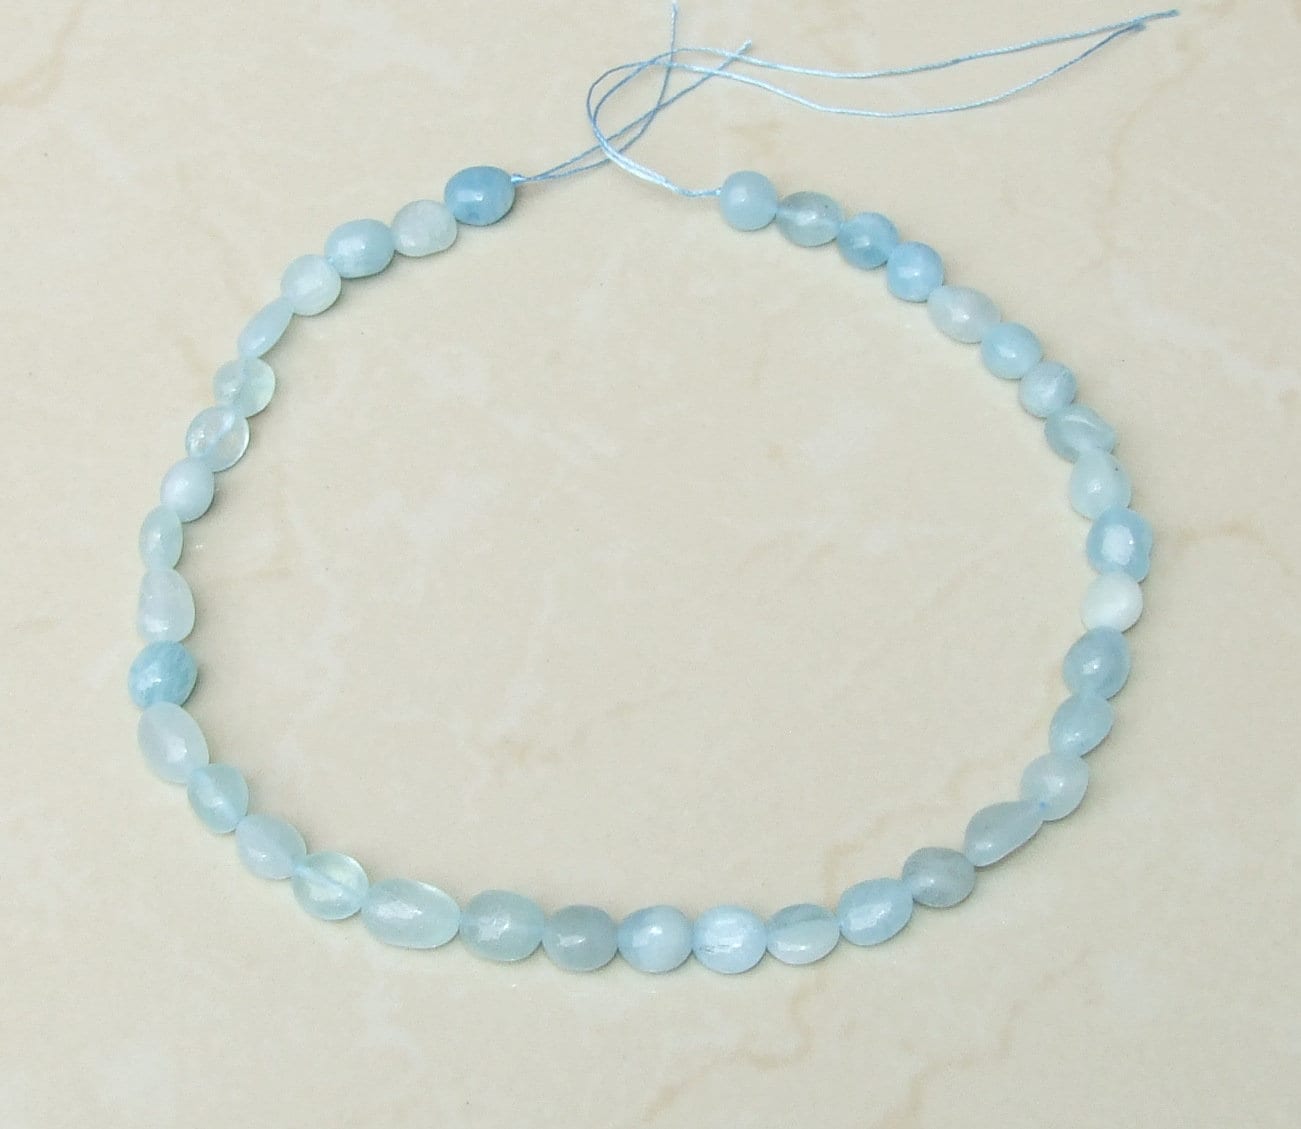 Aquamarine Beads, Gemstone Beads, Aquamarine  Nuggets, Natural Aquamarine, Polished Aquamarine, Natural Gemstones, Full Strand - 10mm - 12mm